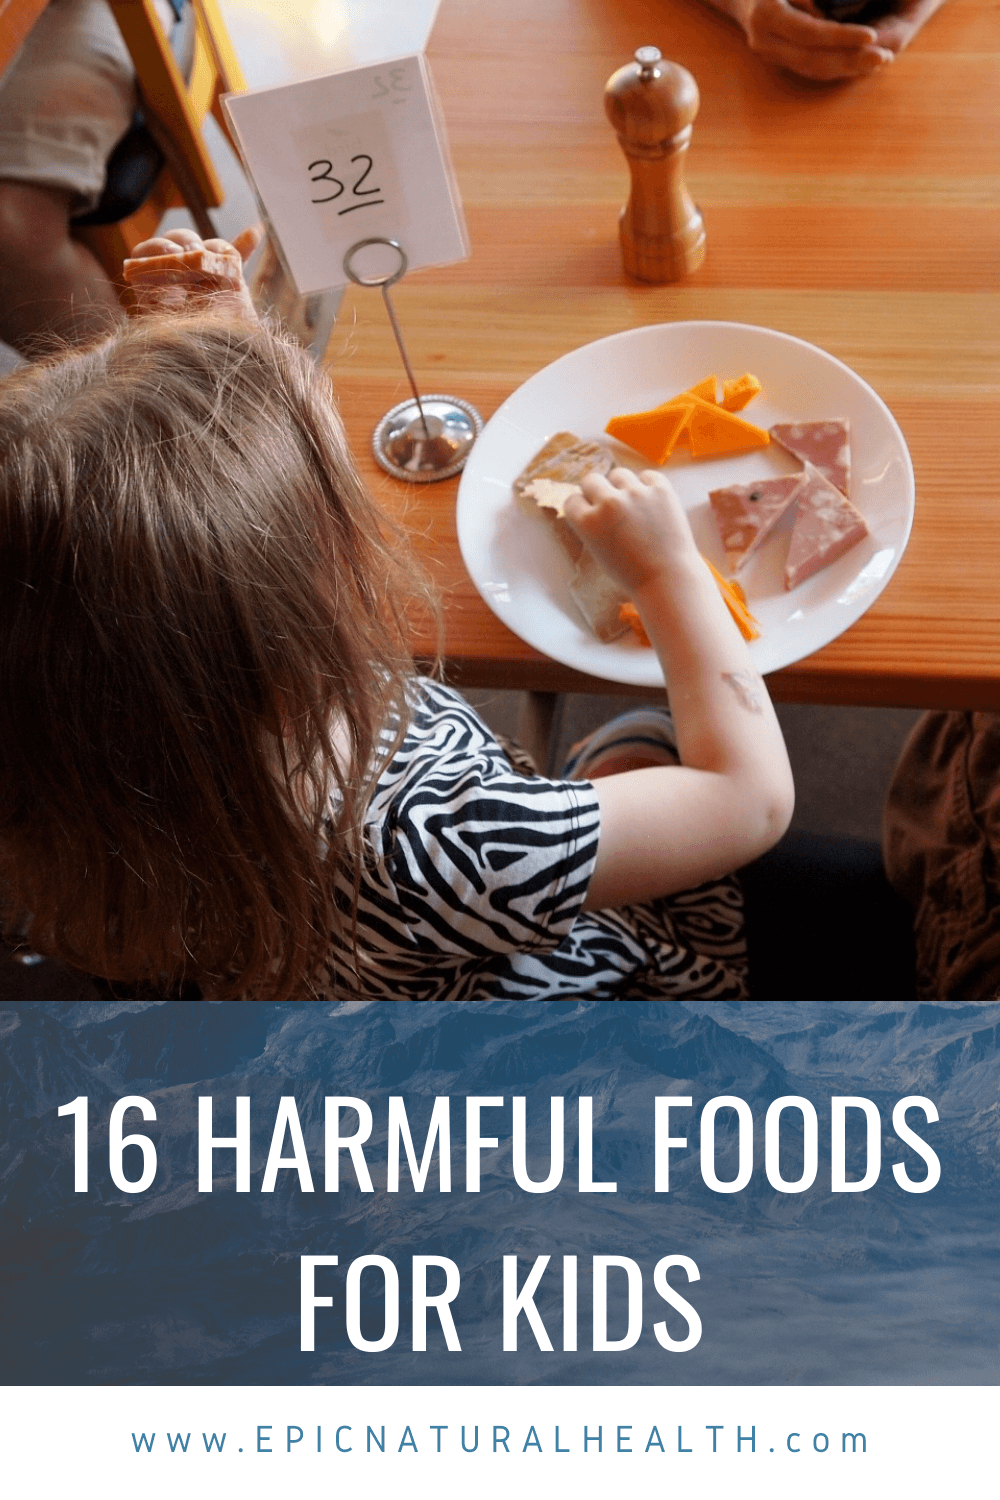 HARMFUL FOODS for kids